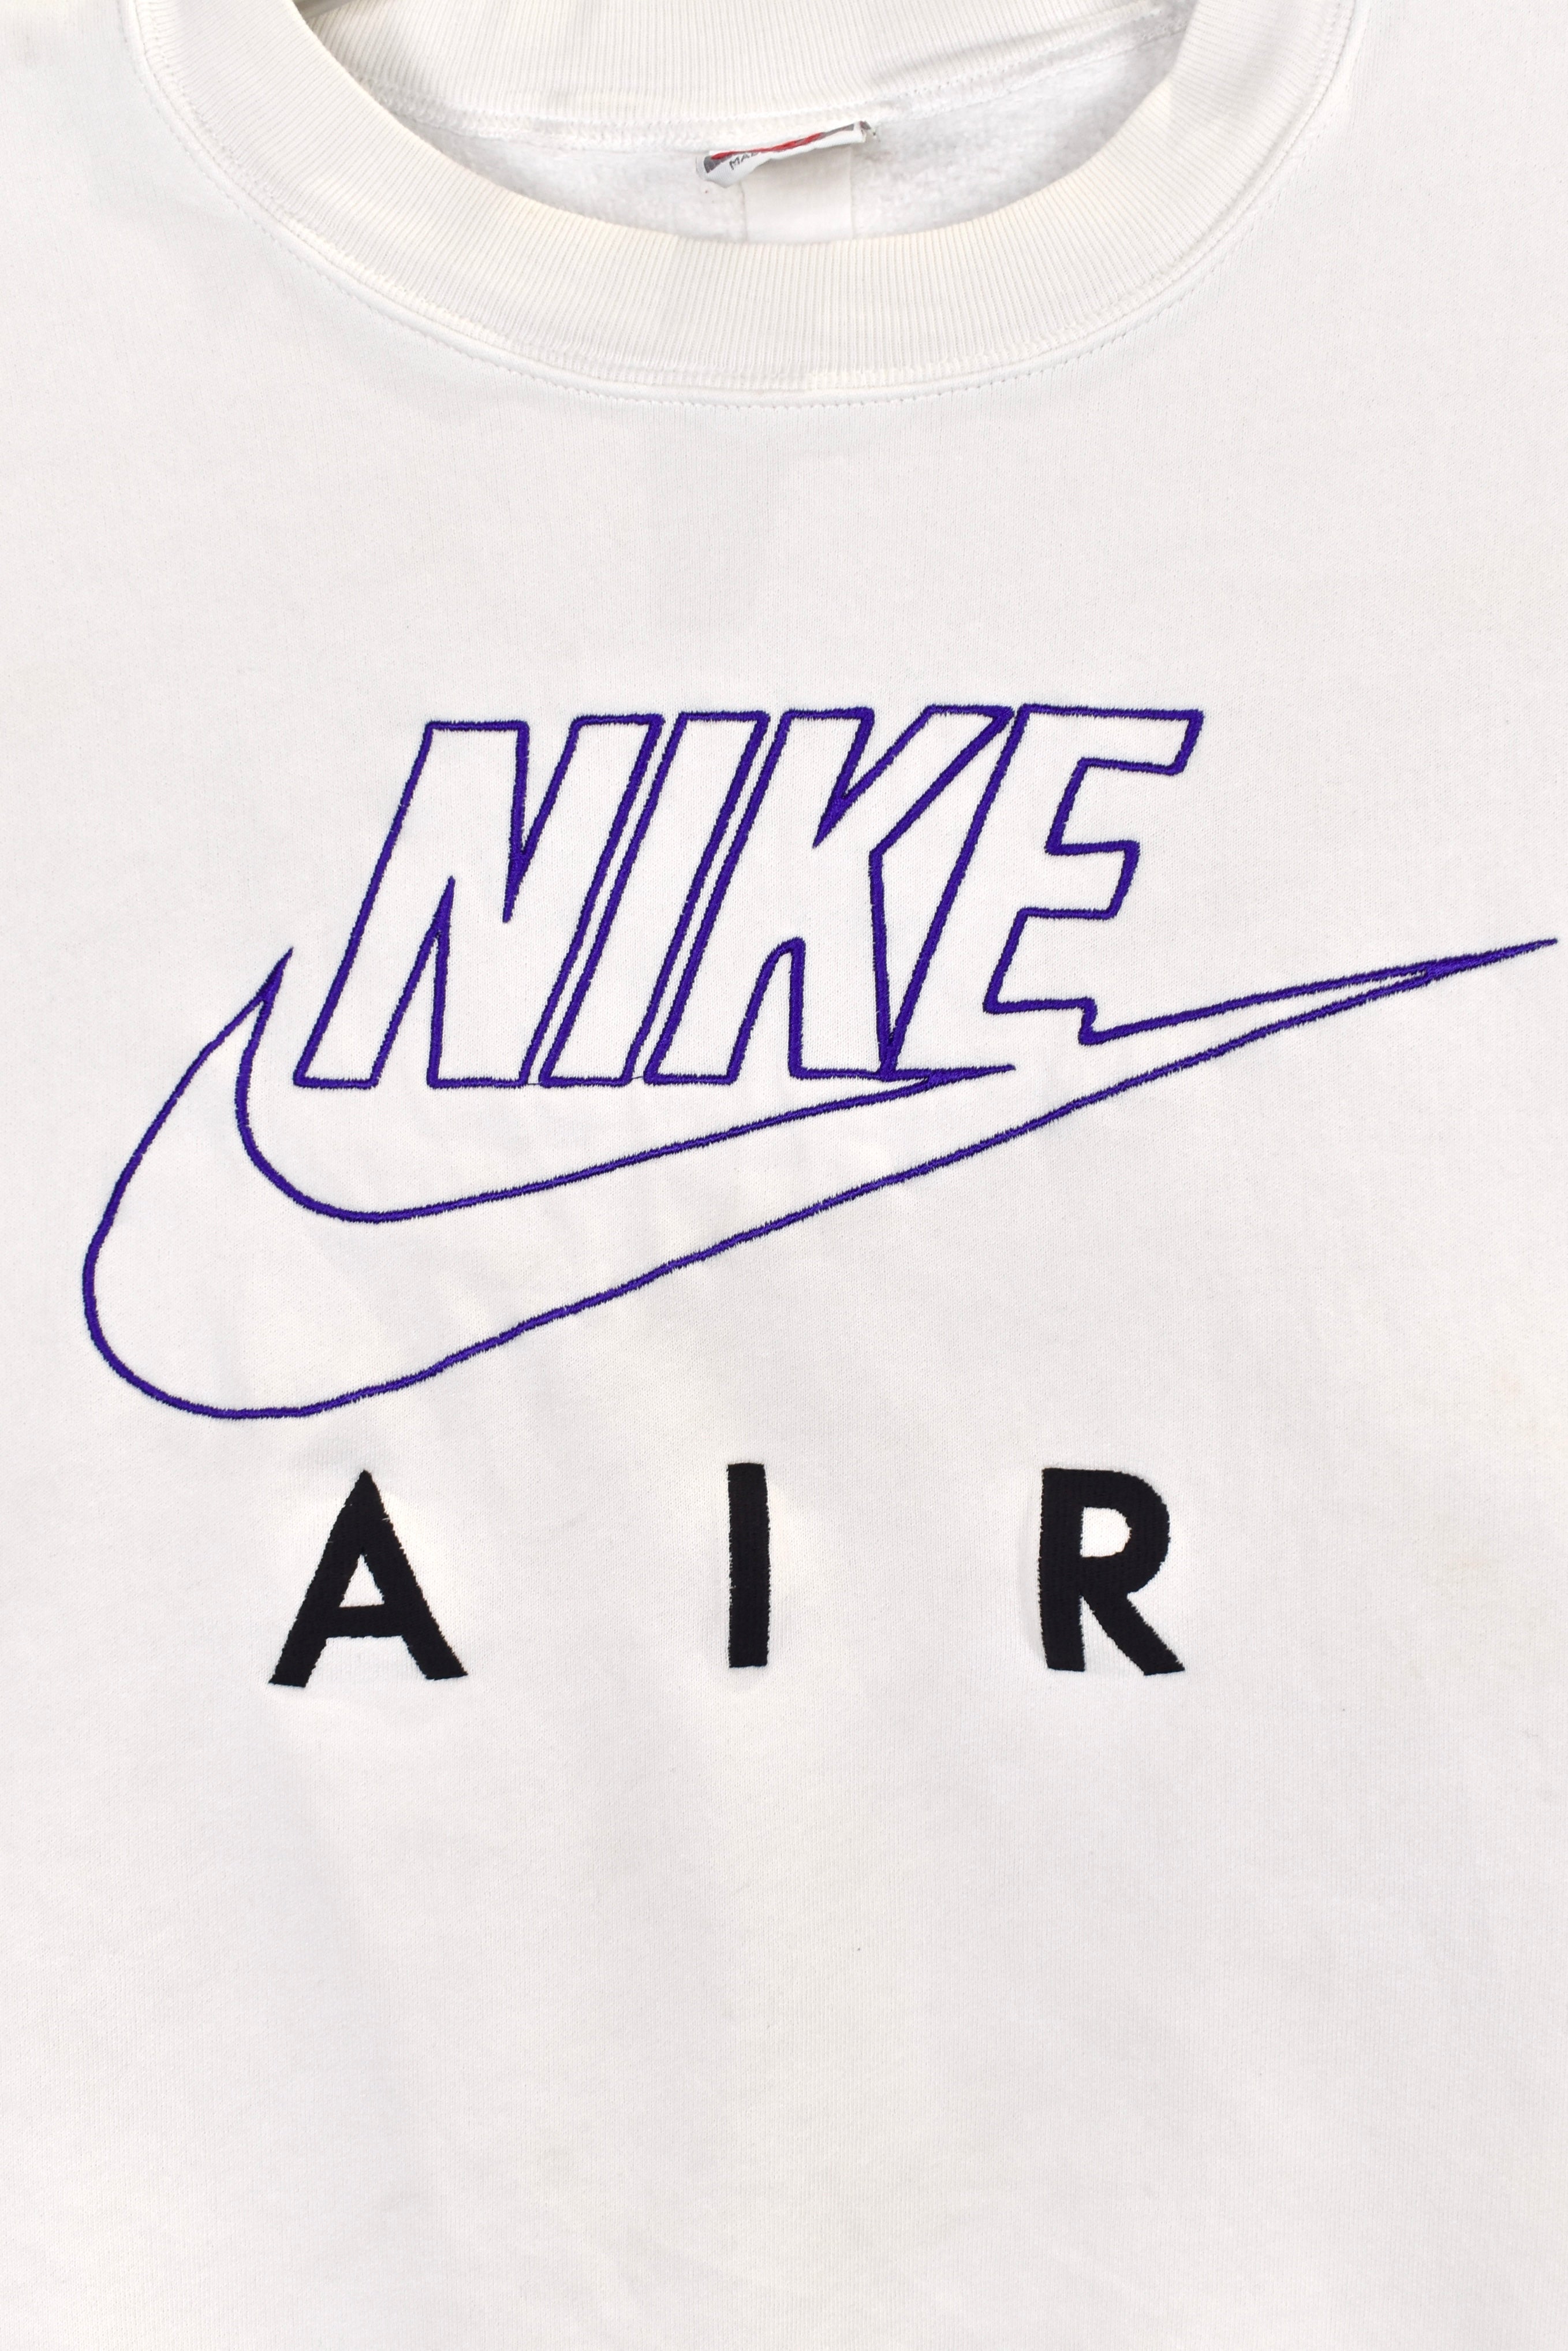 Vintage Nike Air sweatshirt, white embroidered crewneck - Large